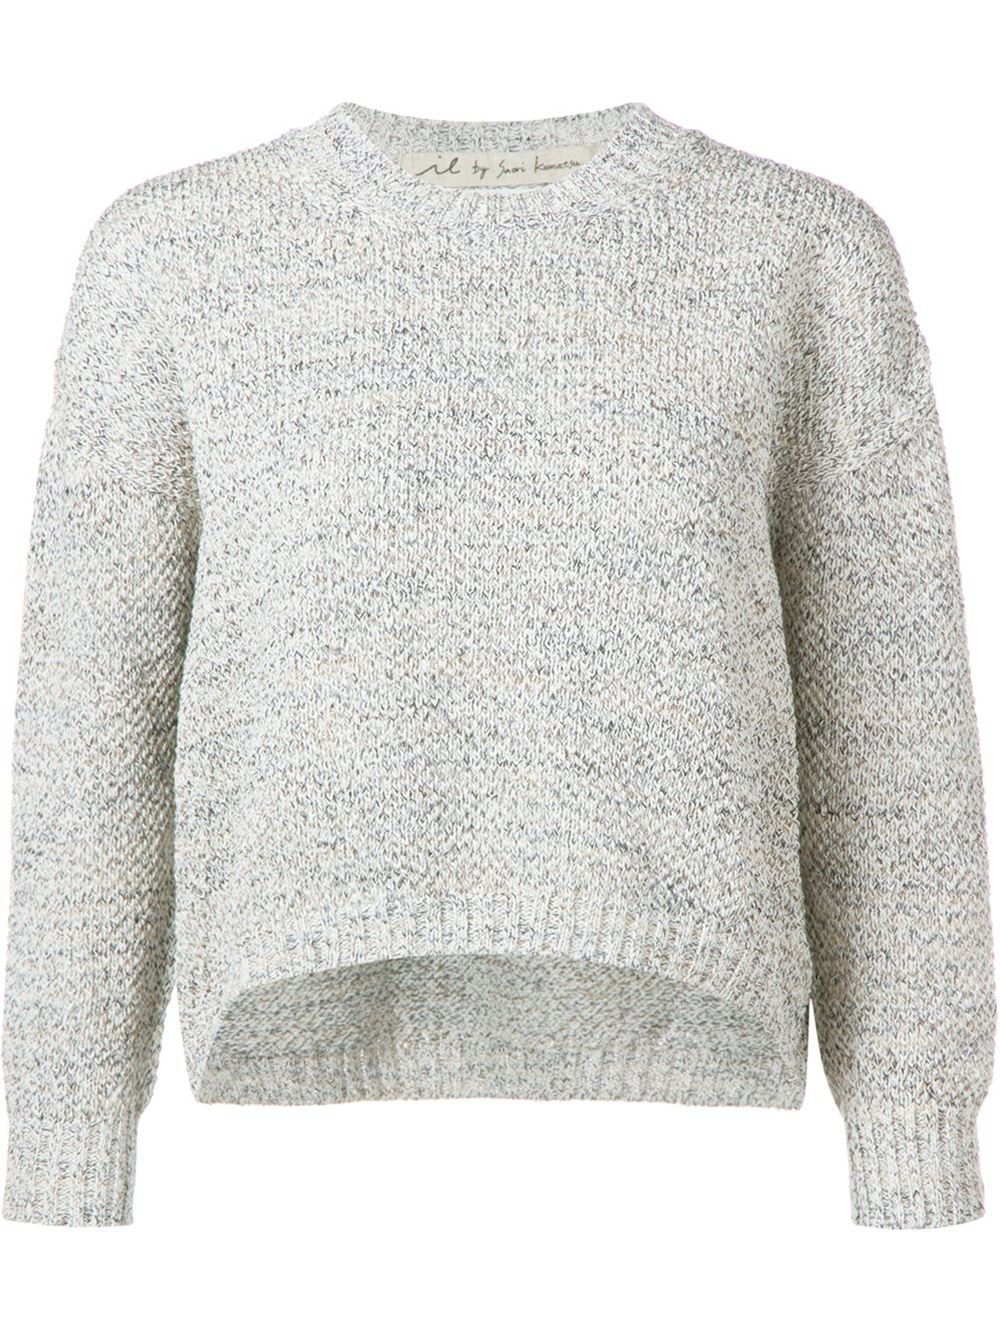 Il by saori komatsu Curved Hem Chunky Knit Sweater in Gray (white) | Lyst